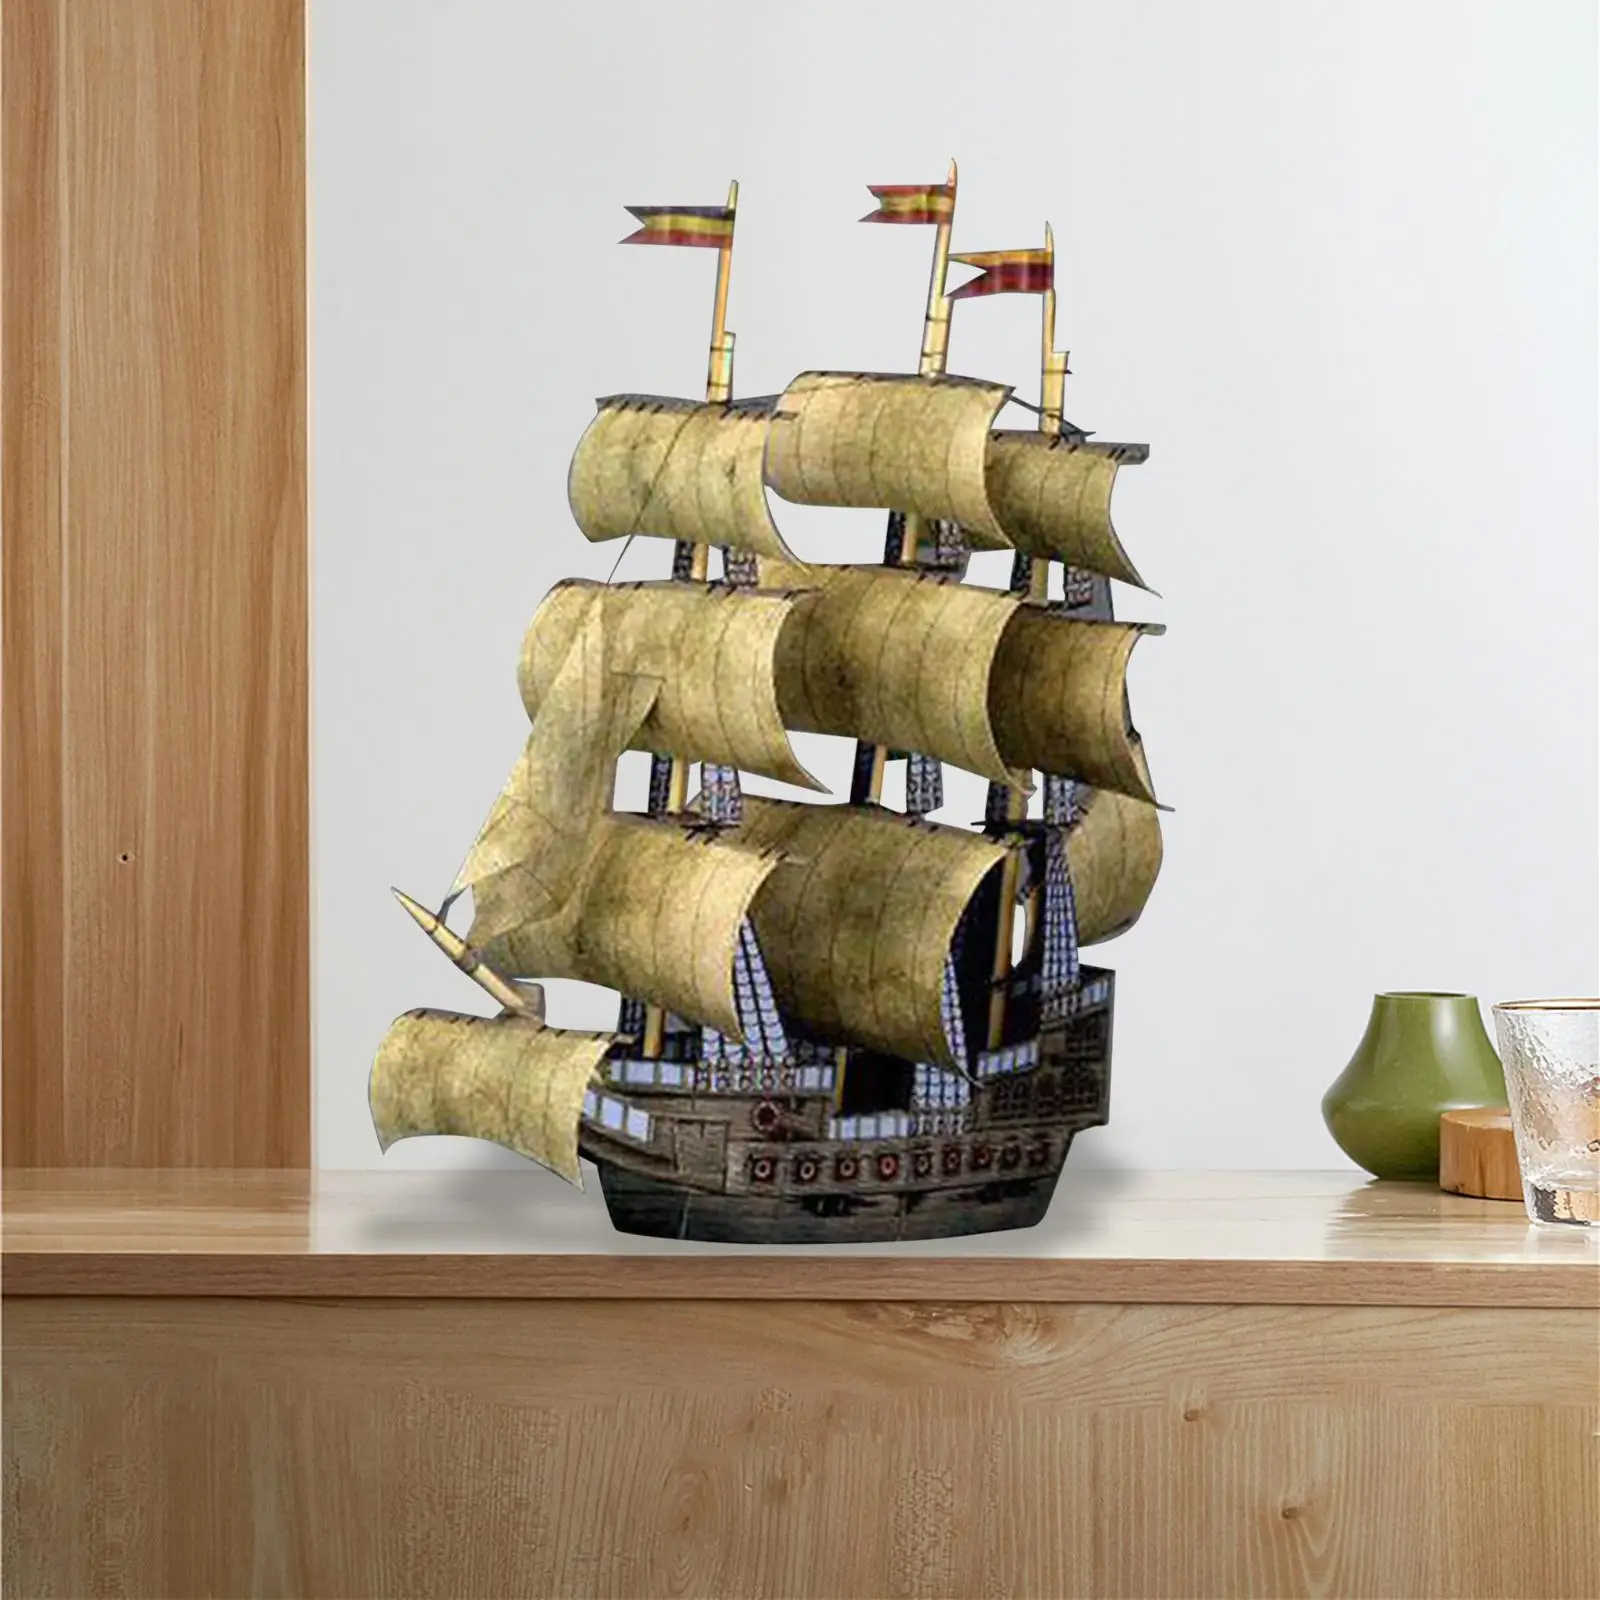 1/250 DIY Assemble Toy Papercraft Vintage Style Sailing Ship Model Kits for Boys Kids Adults Children Home Decoration